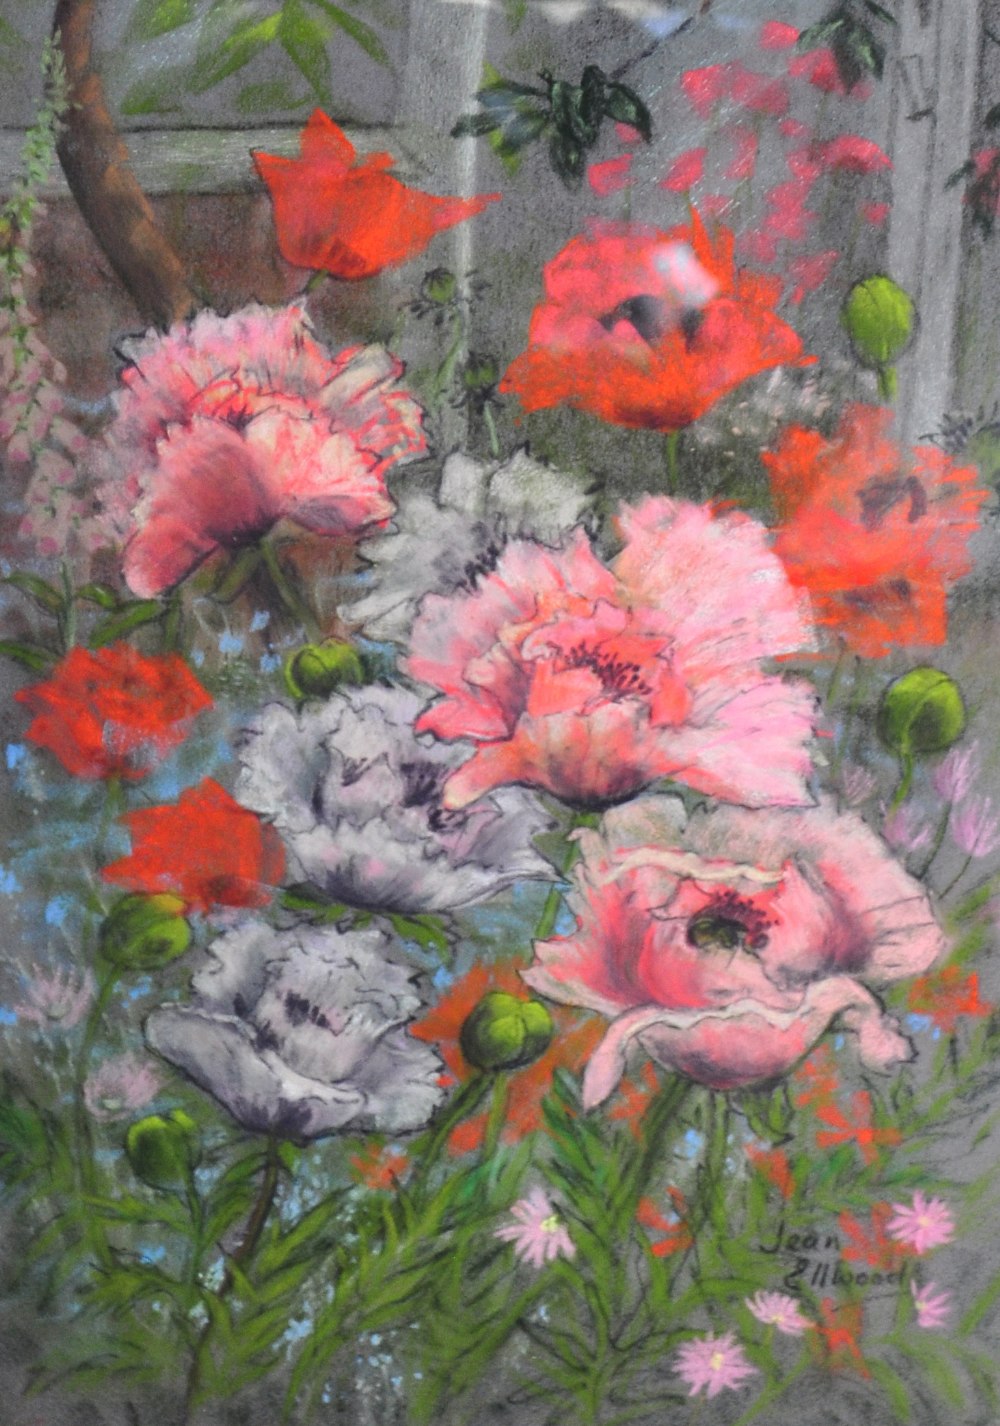 JEAN ELLWOOD; pastel, "Poppy Corner", signed, inscribed on label verso, 48 x 30.